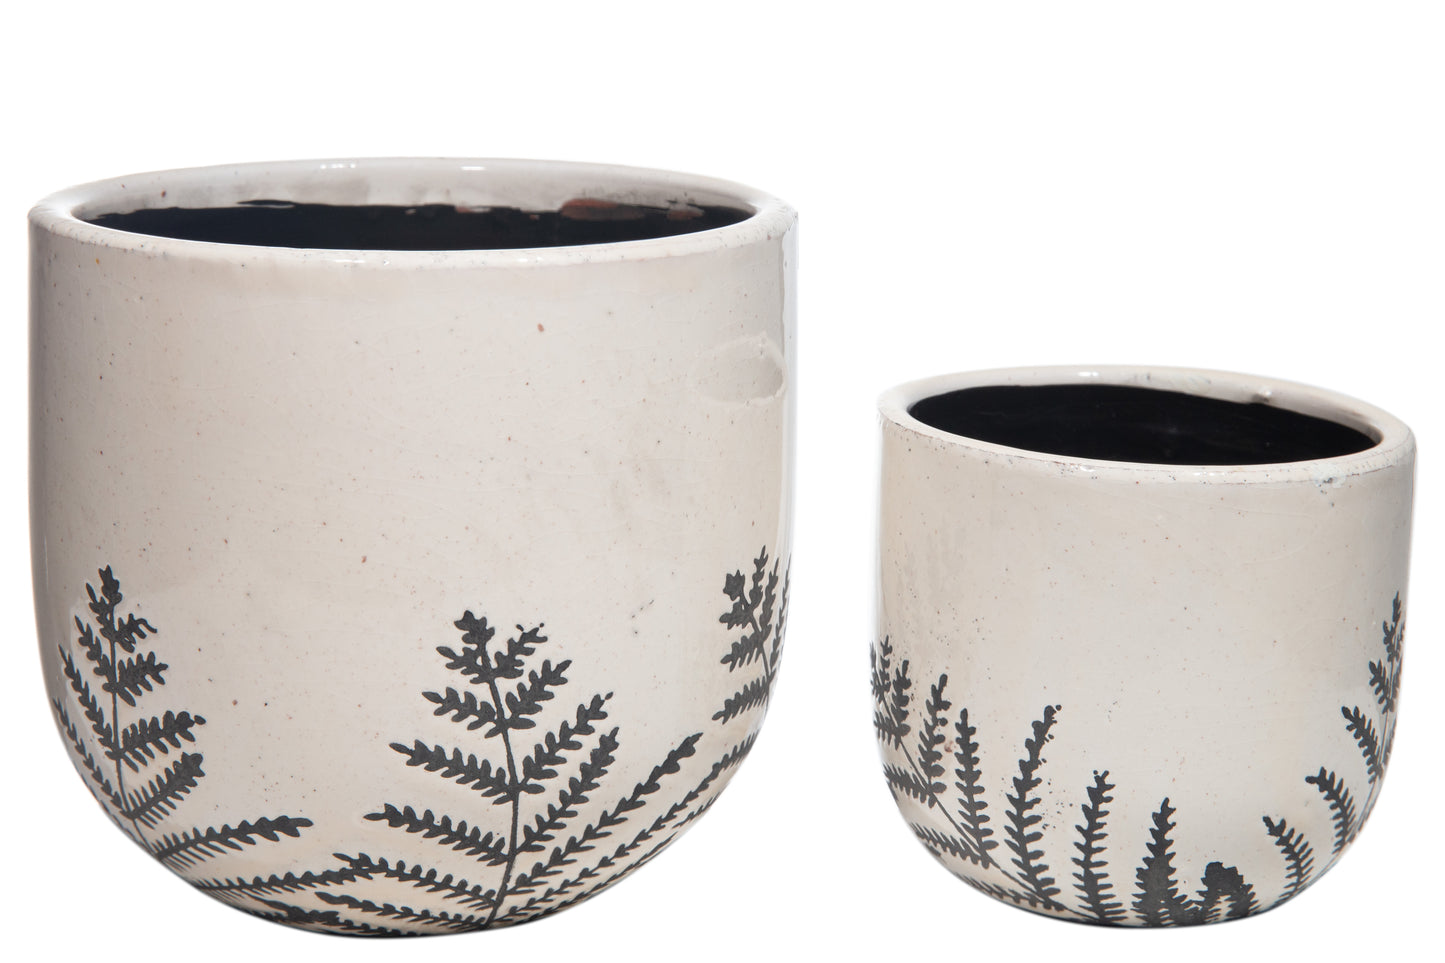 Ceramic Round Pot with Bottom Fern Leaf Design, Set of 2